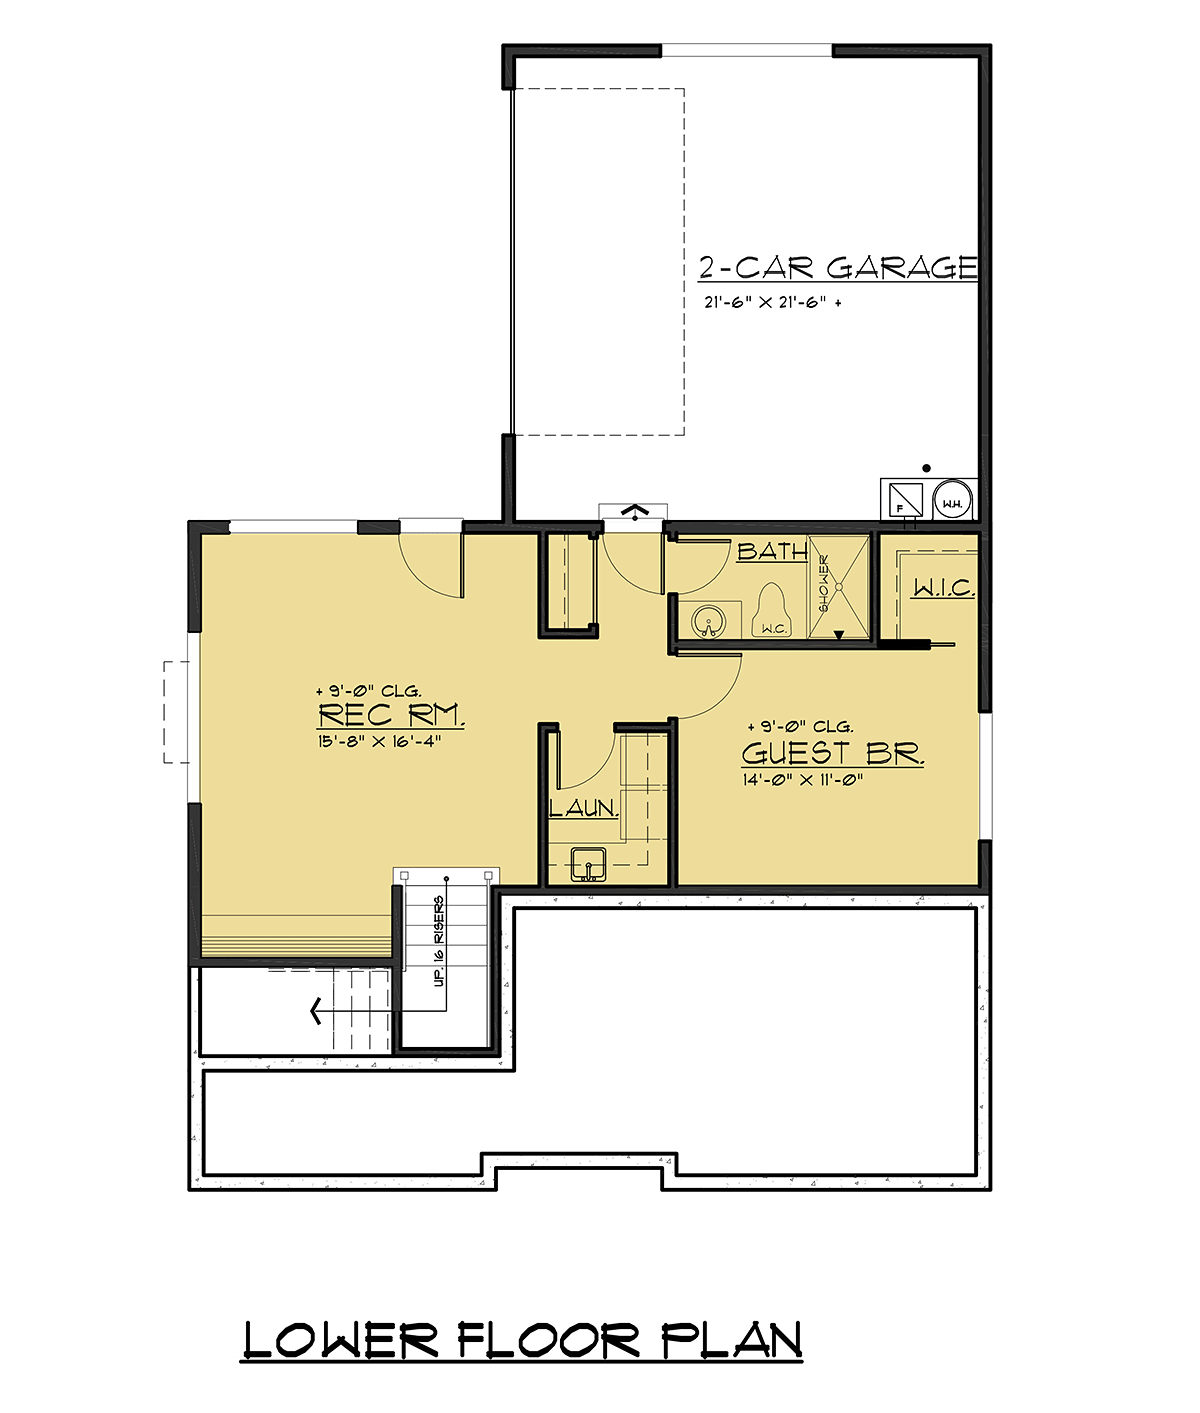 House Plan 81921 Lower Level